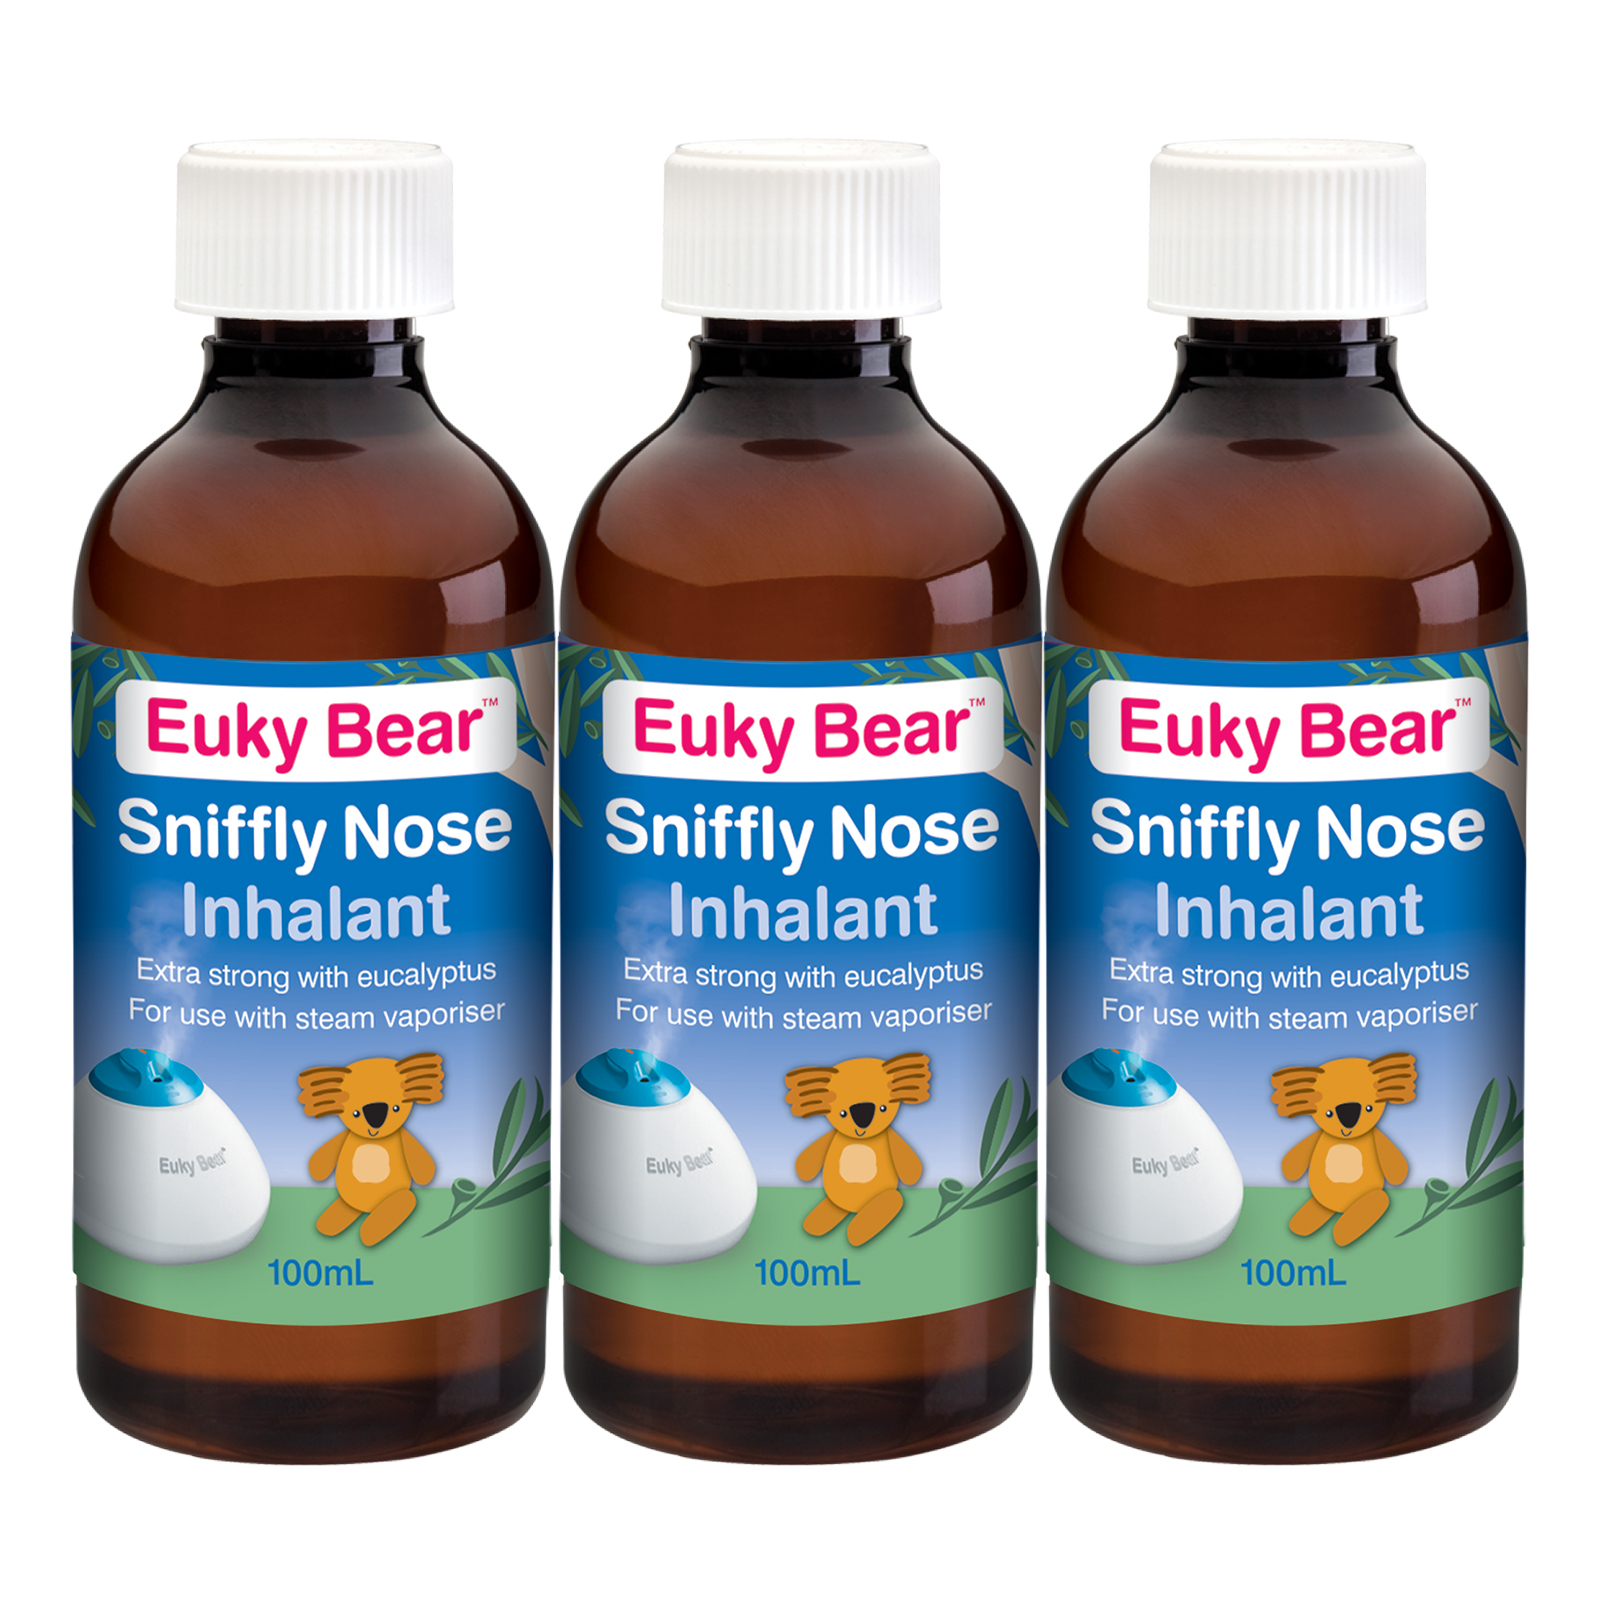 Euky Bear Sniffly Nose Inhalant 100ml (Bundle of 3)